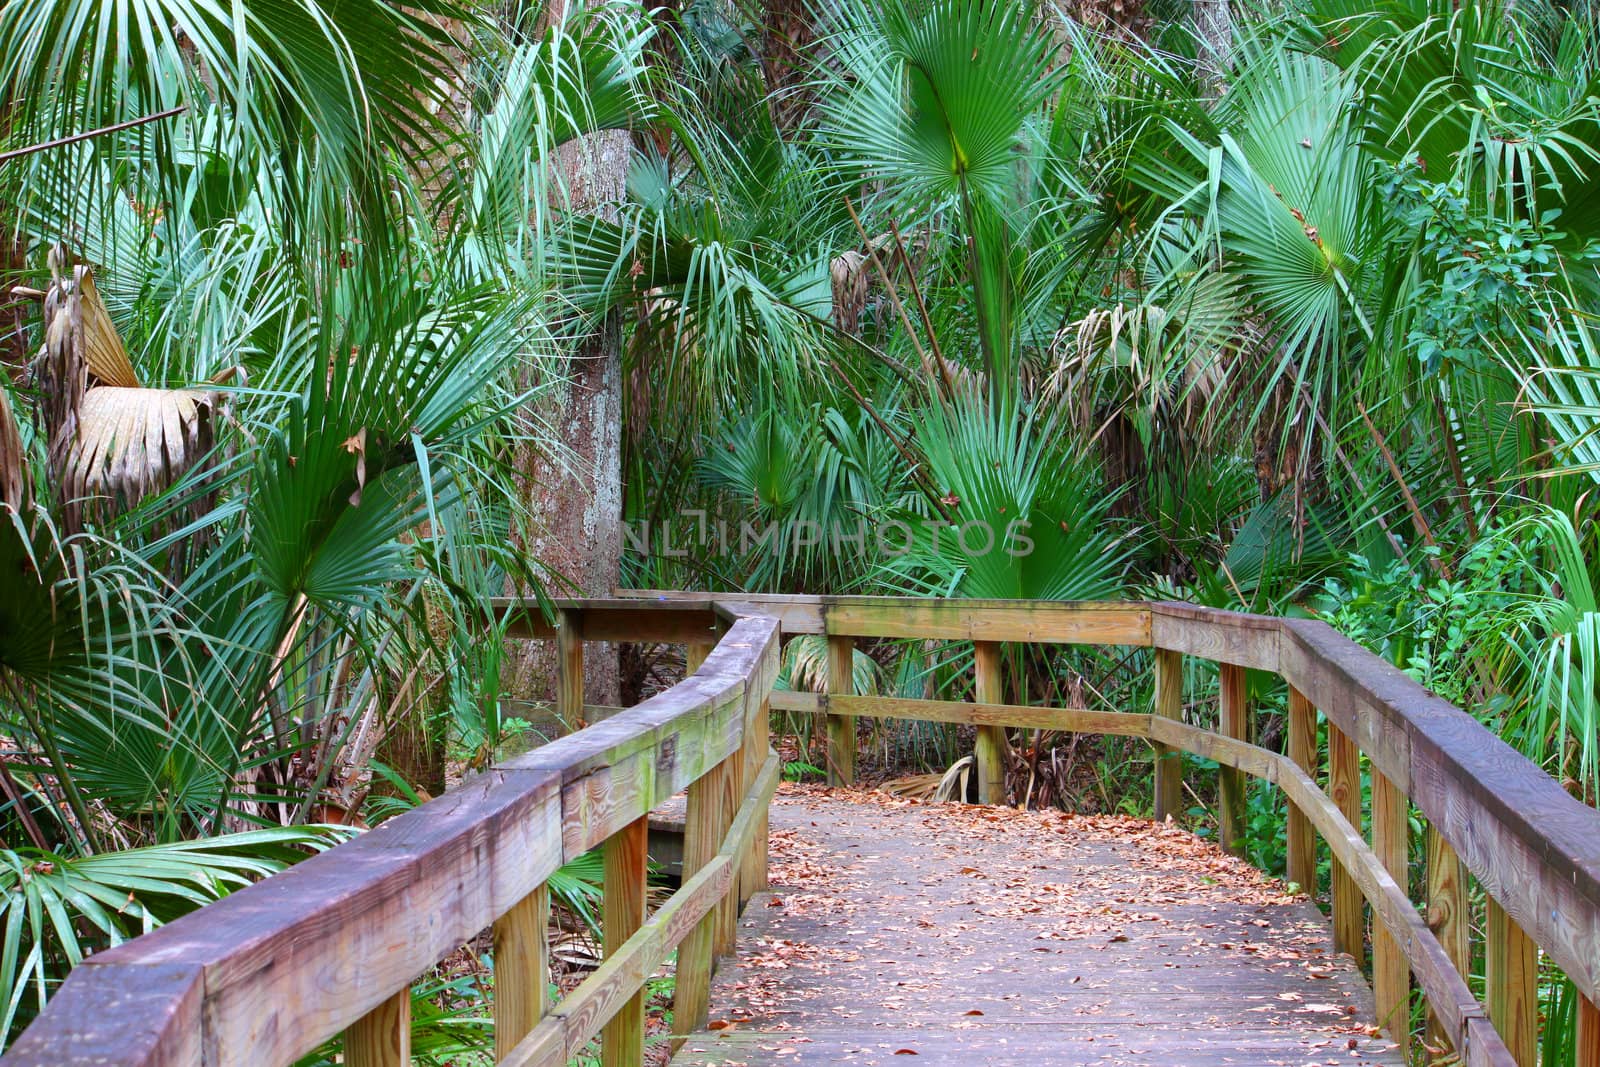 Boardwalk through the swampy landscape of Highlands Hammock State Park in Florida.